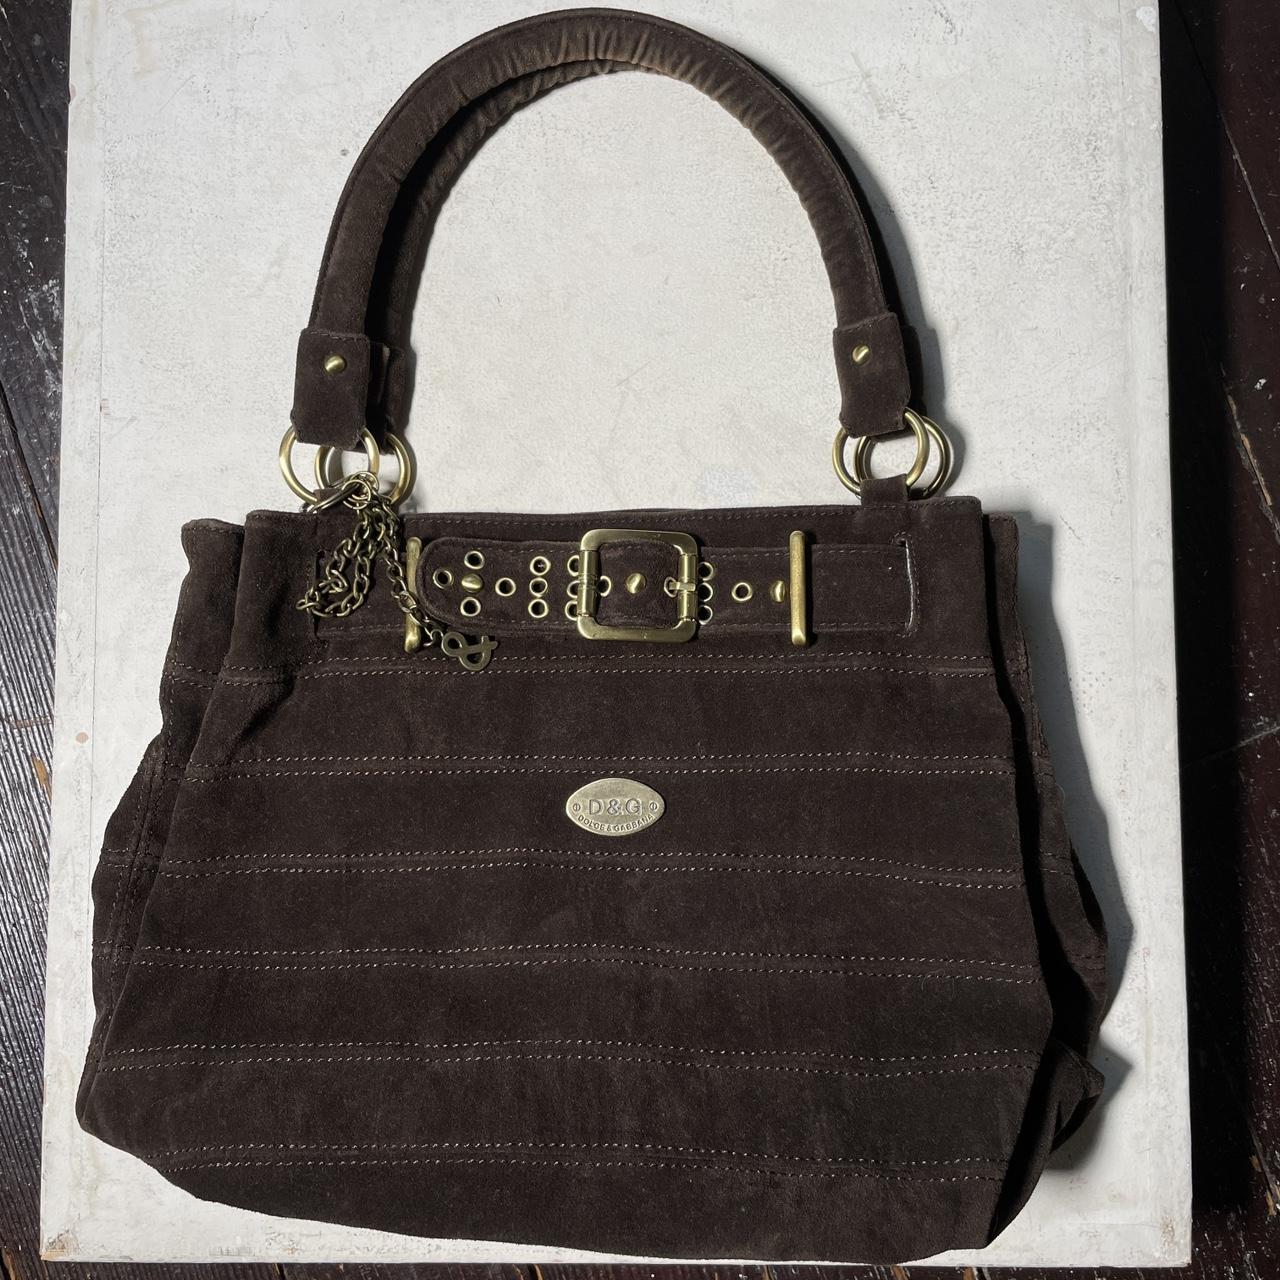 Fiore Genuine Leather Hobo Tote Handbag Purse Made in Italy New W/Tag D.14X5X15  | eBay